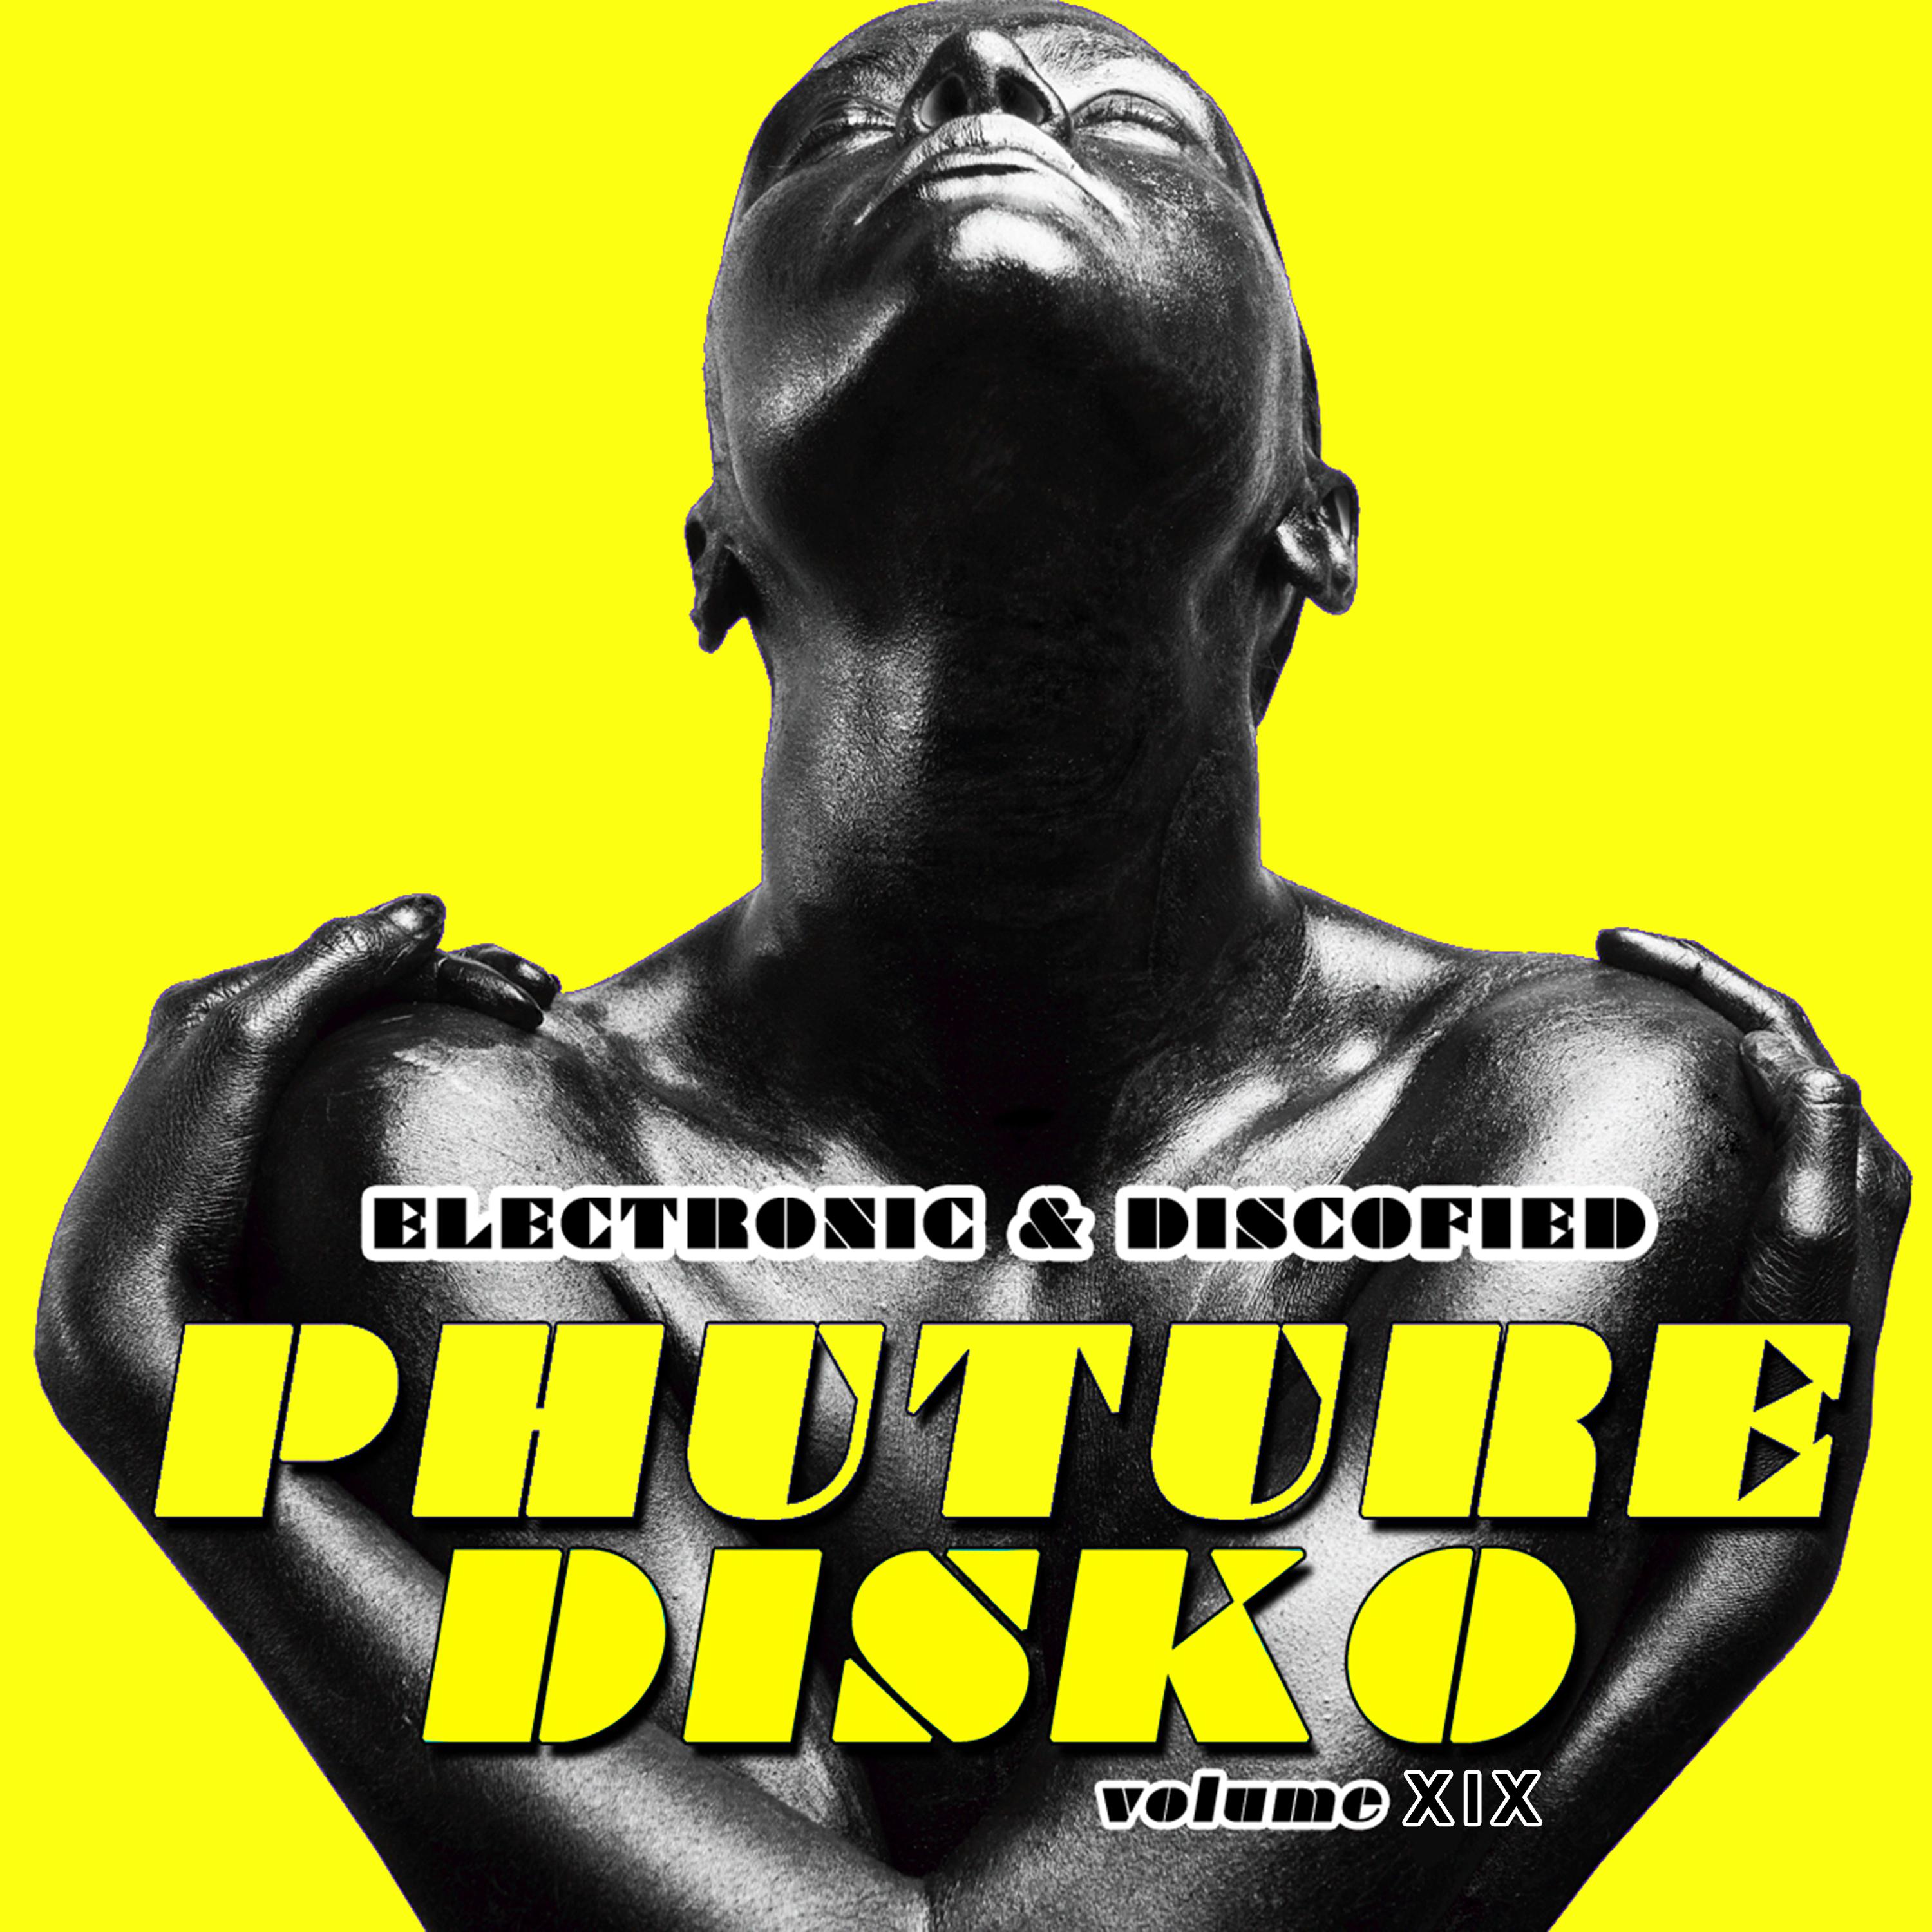 Phuture Disko, Vol. 19 - Electronic & Discofied